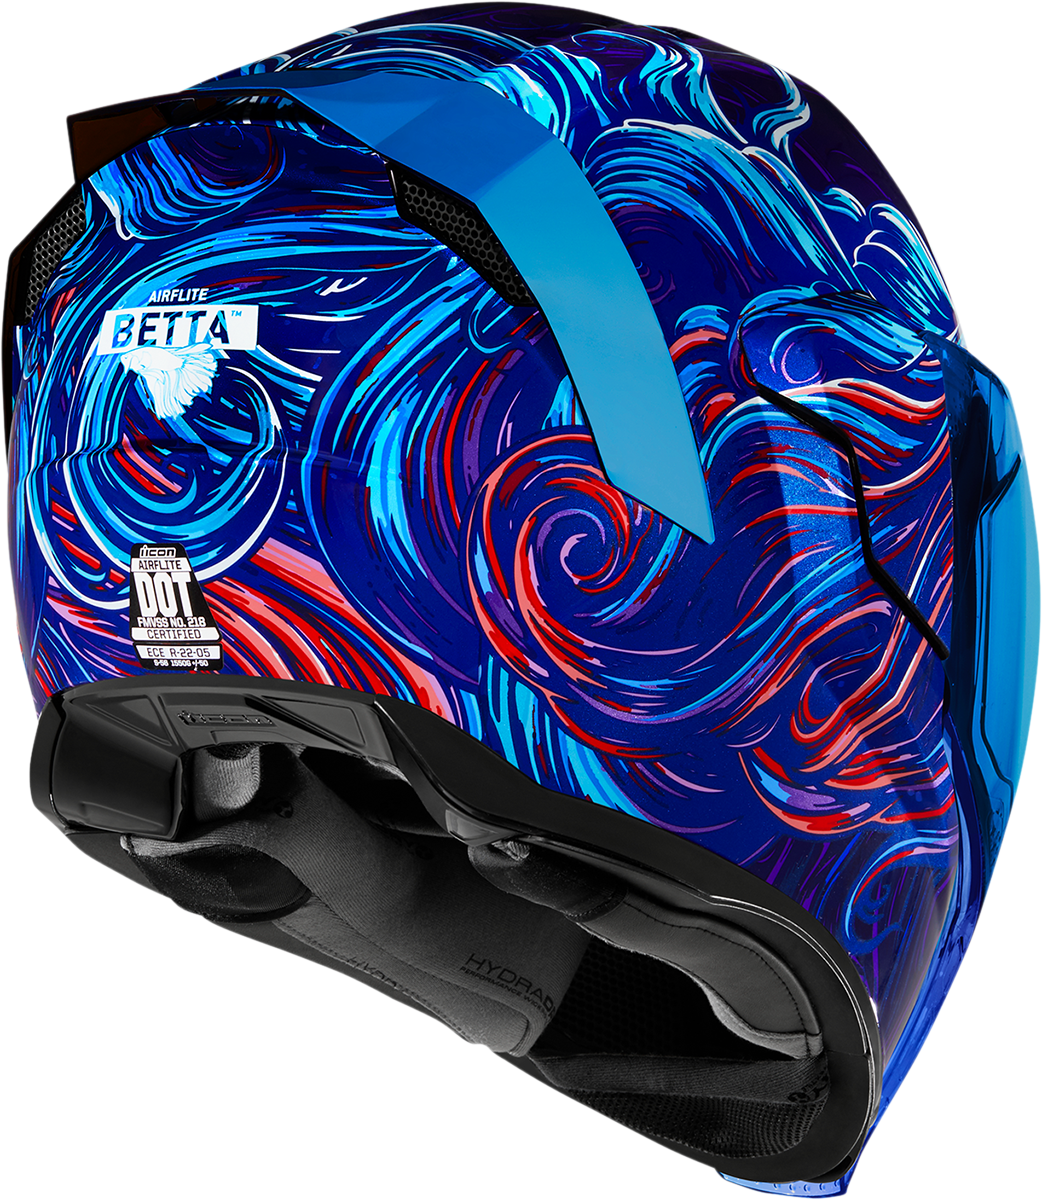 ICON Airflite* Helmet - Betta - Blue - XL 0101-14710